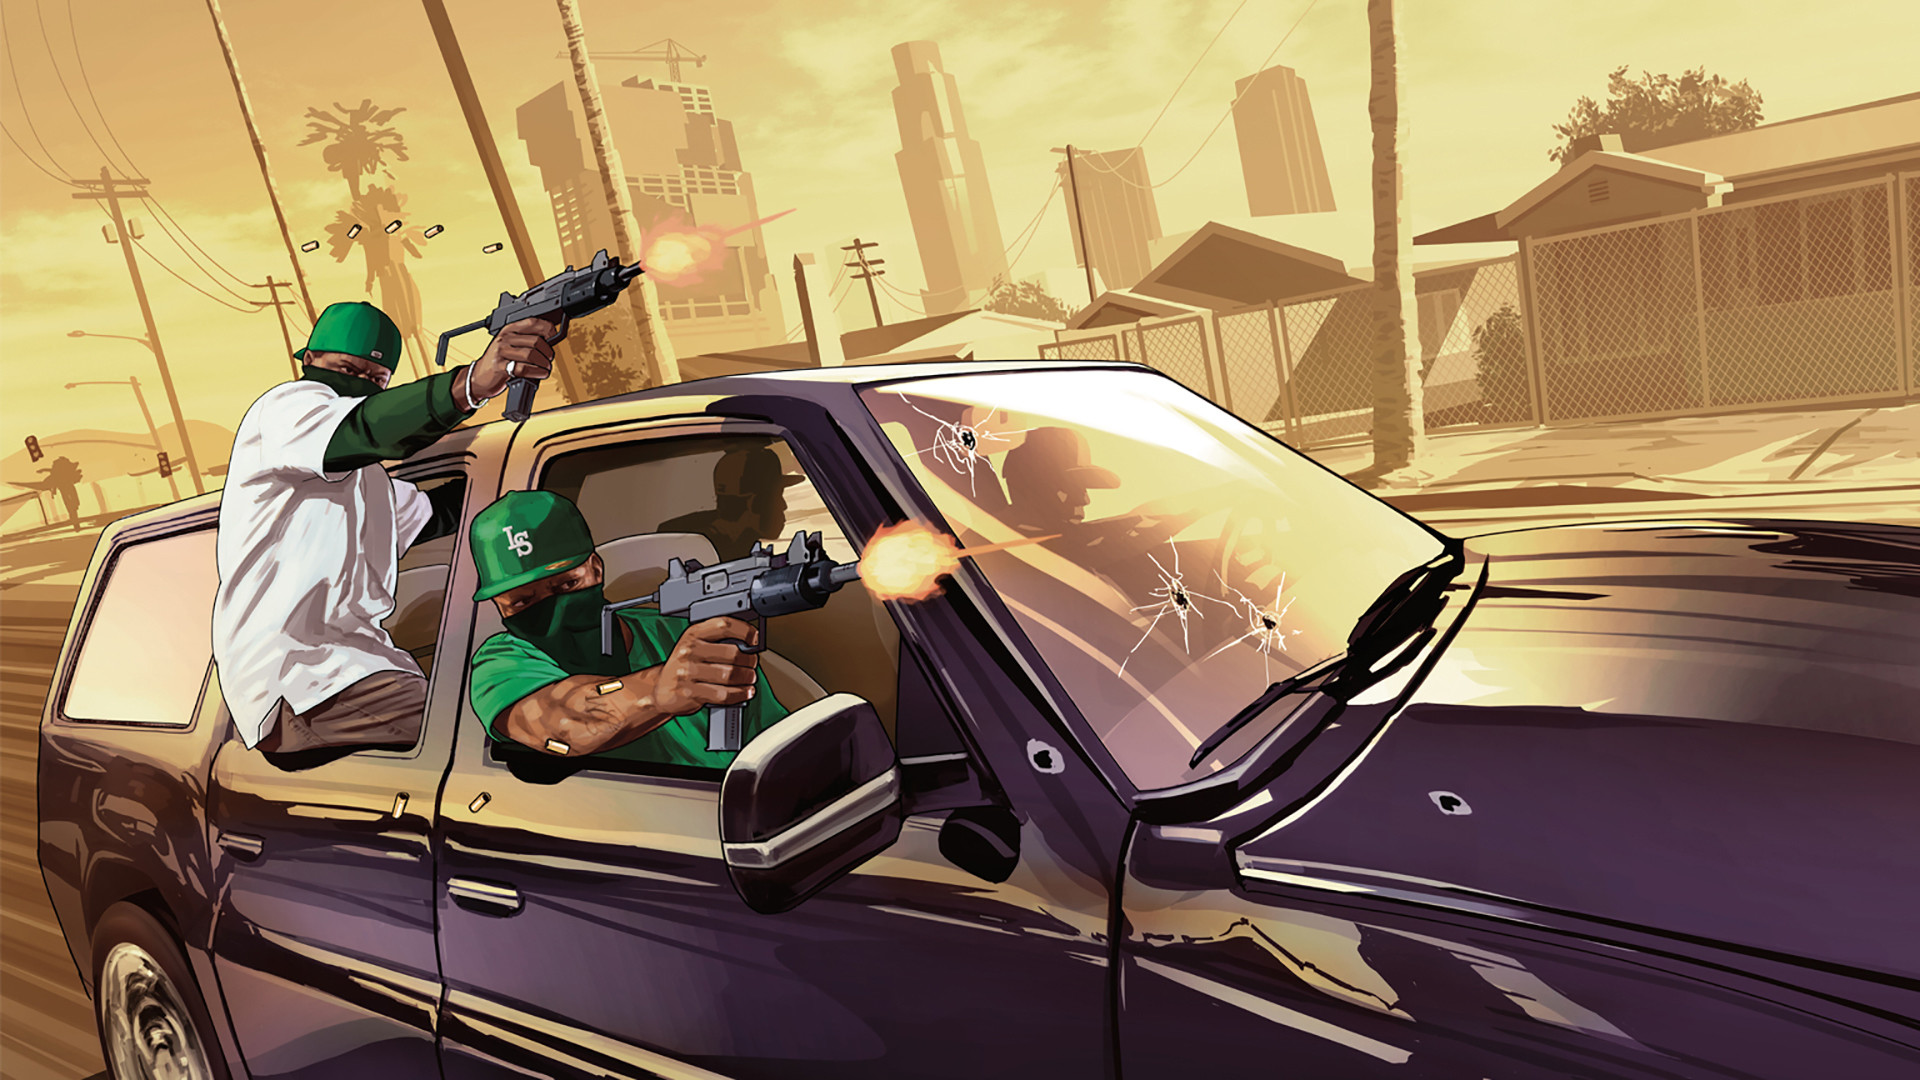 Grand Theft Auto V  GTA 5 Computer Wallpapers Desktop Backgrounds   3840x2160  ID564931  Grand theft auto Phong cảnh Hình nền